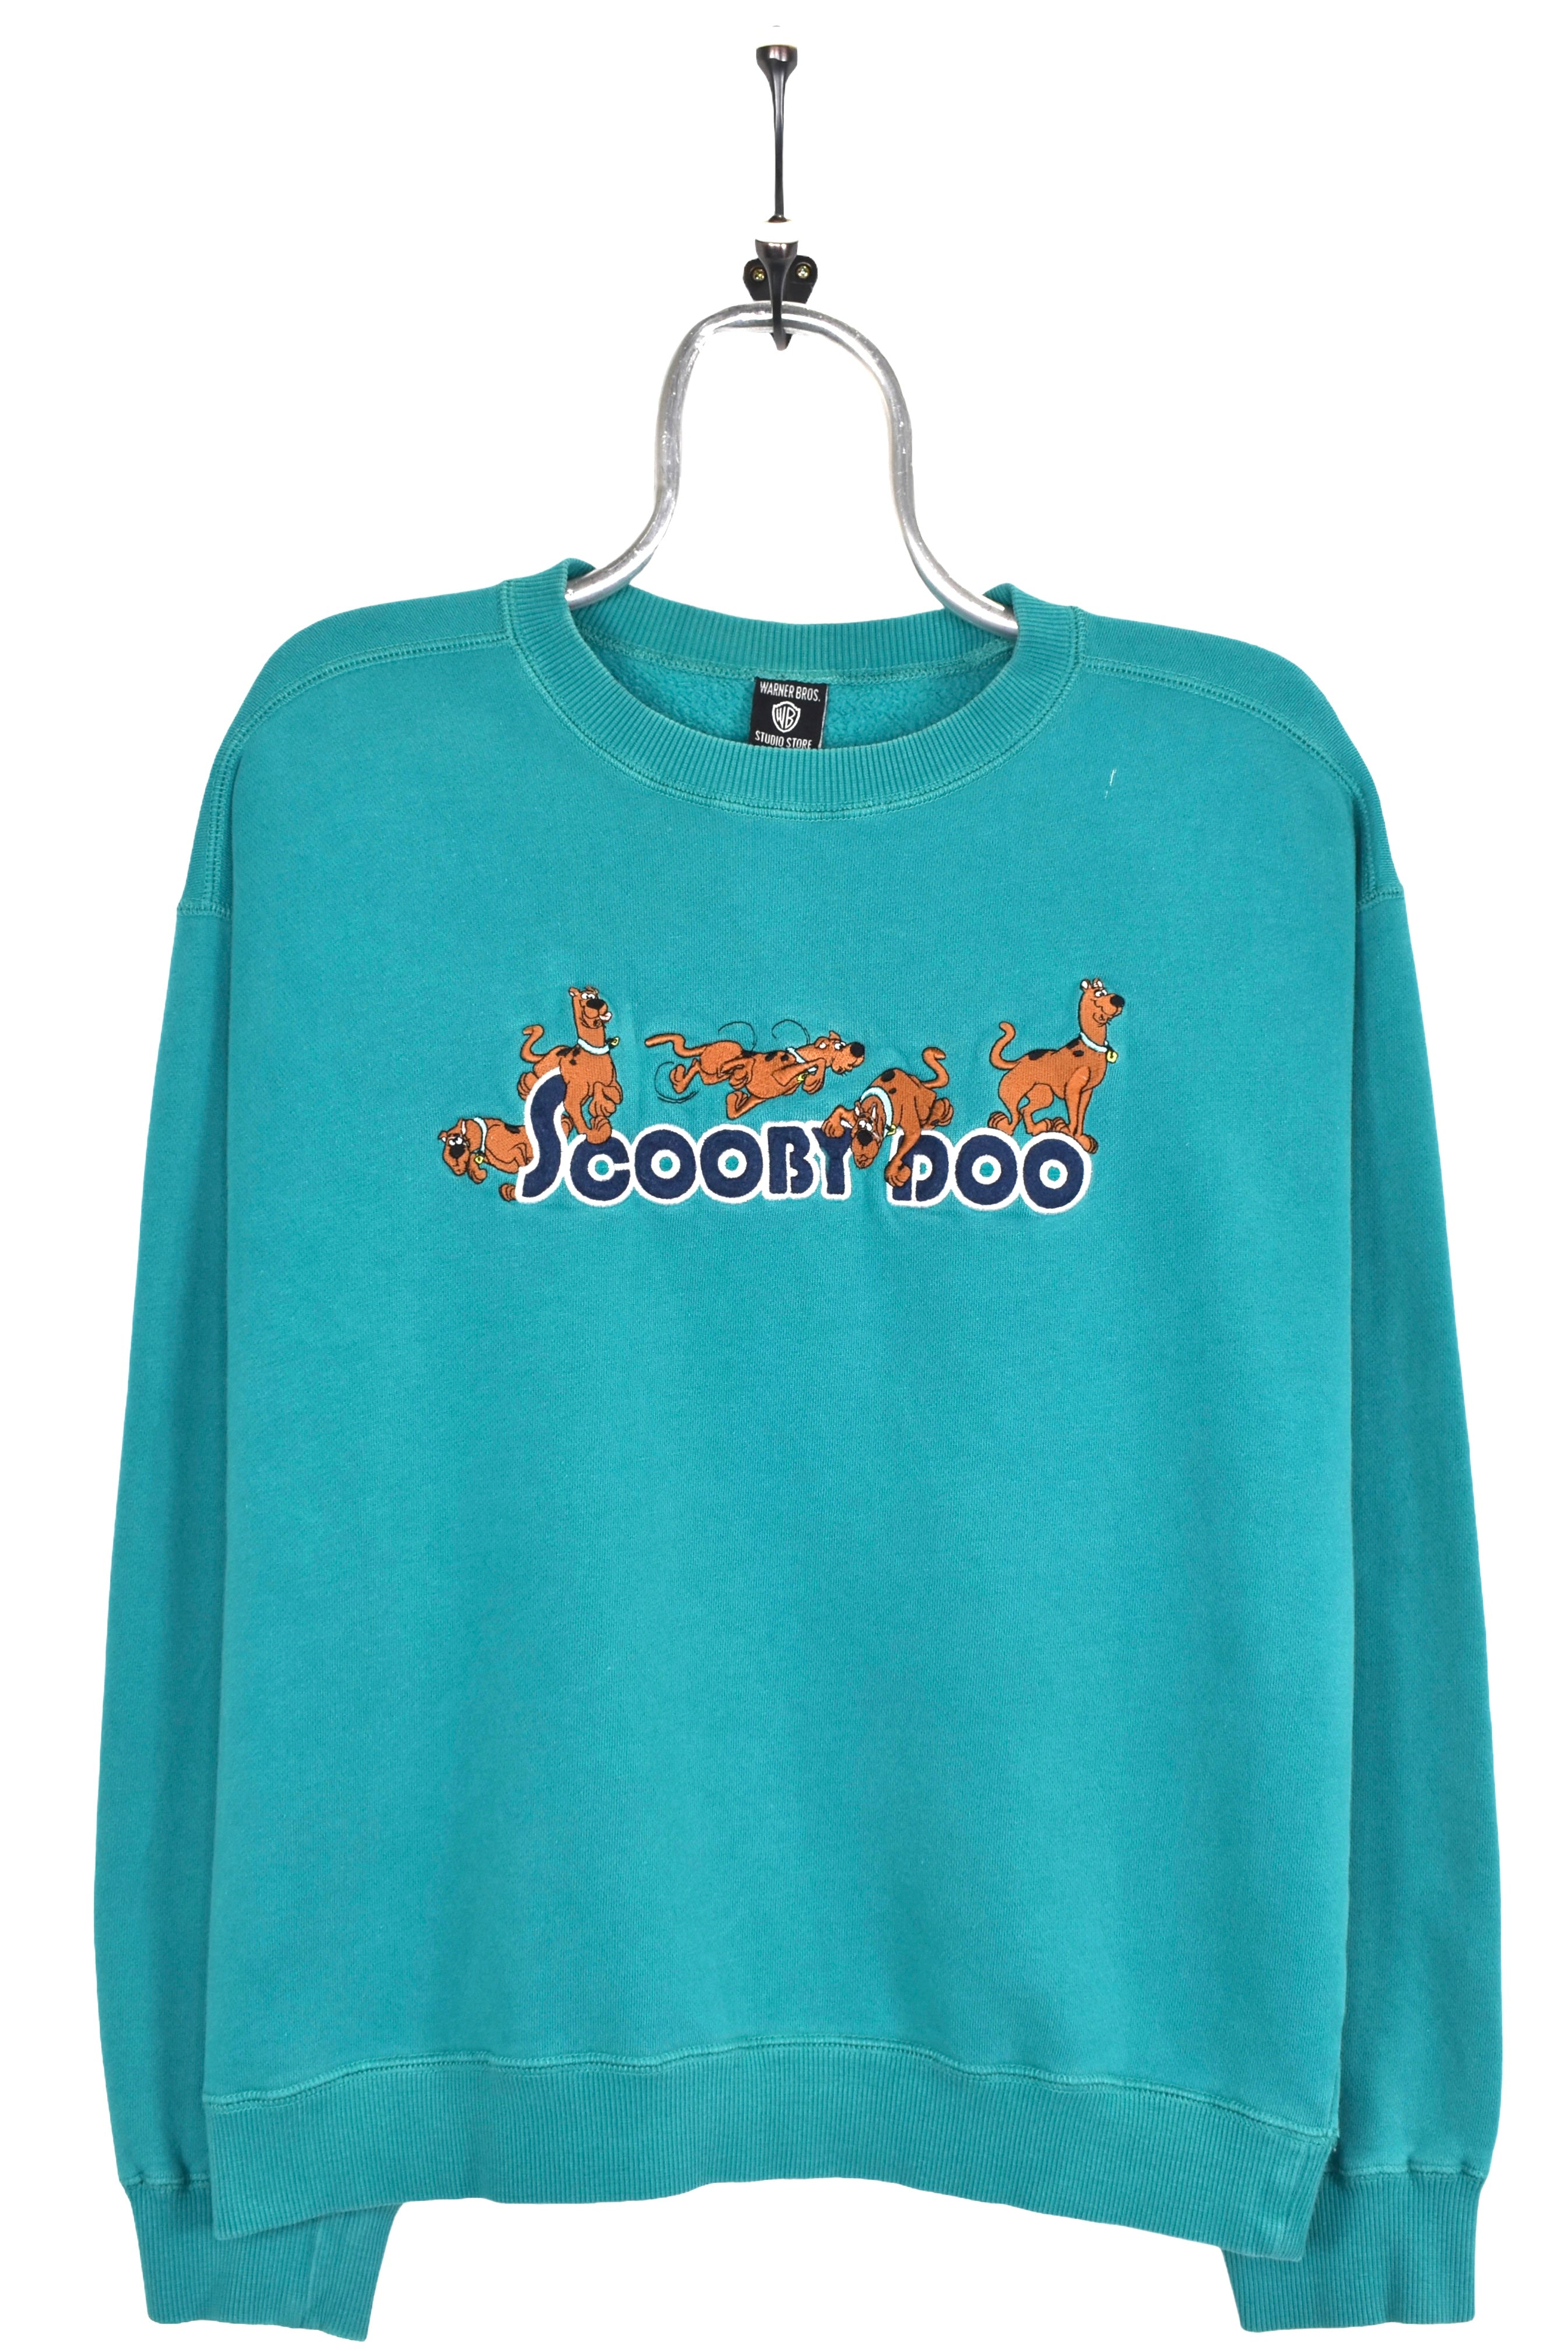 Vintage Scooby Doo sweatshirt, blue embroidered crewneck - Medium